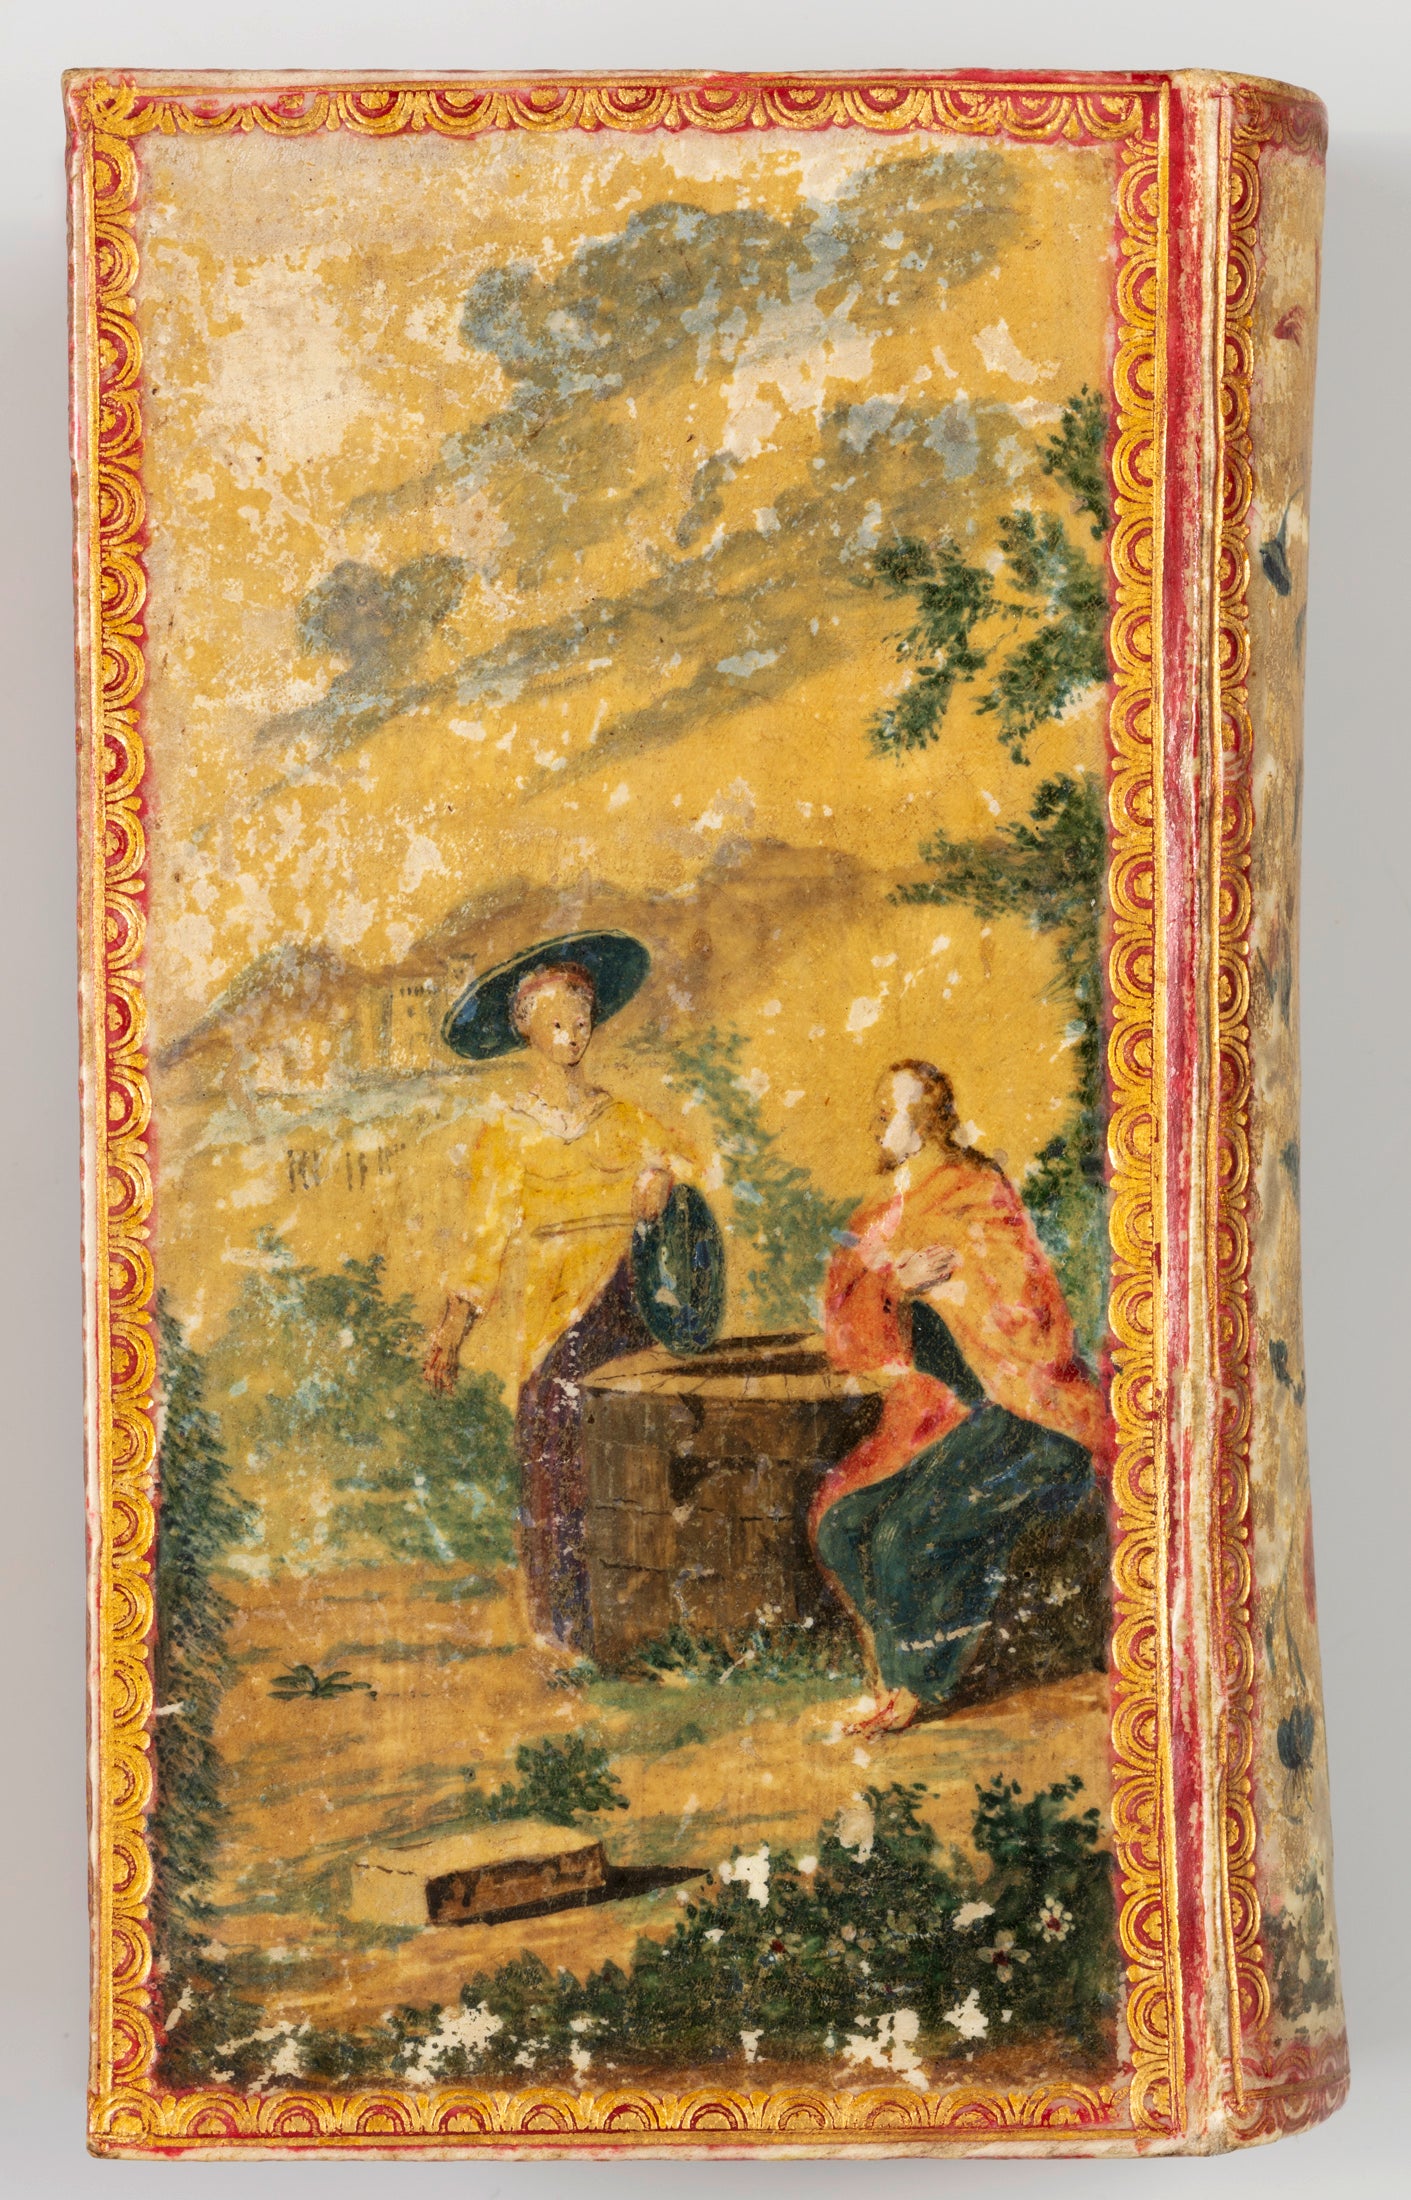 Zeldzame compleet beschilderde achttiende-eeuwse bijbelband